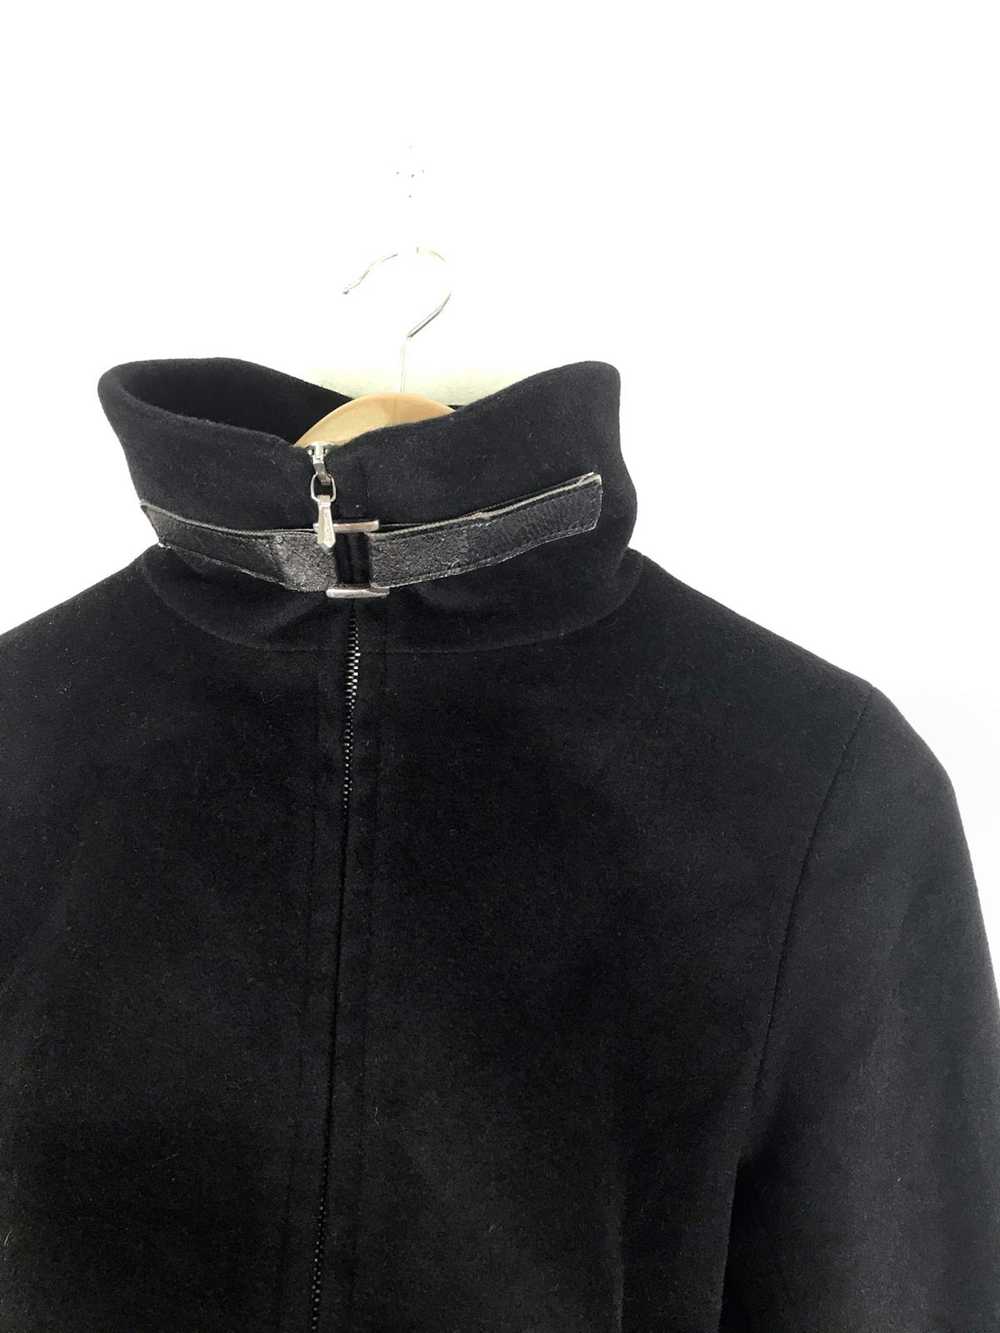 Agnes B. Neck Leather Strap Wool Jacket - image 3